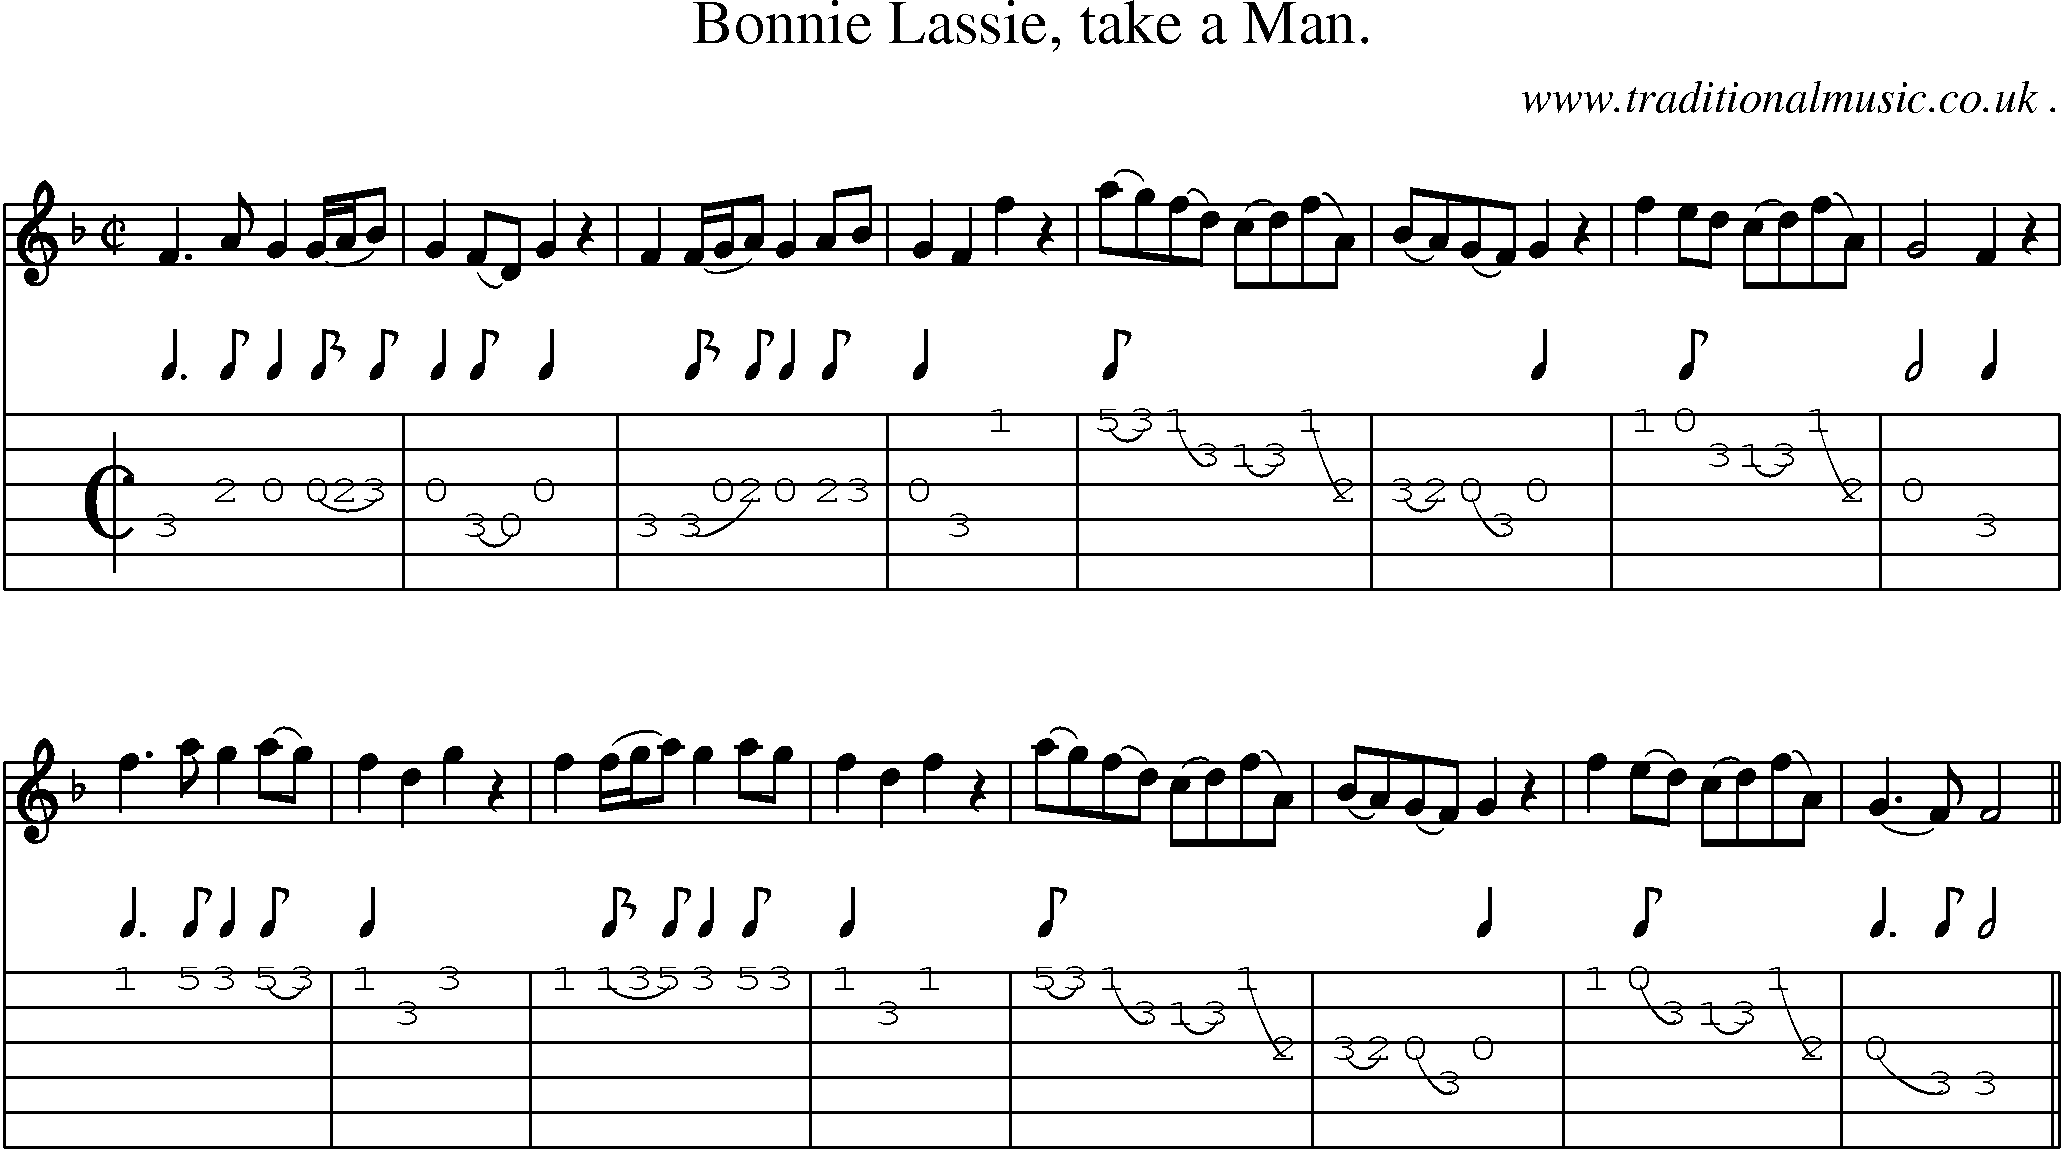 Sheet-Music and Guitar Tabs for Bonnie Lassie Take A Man